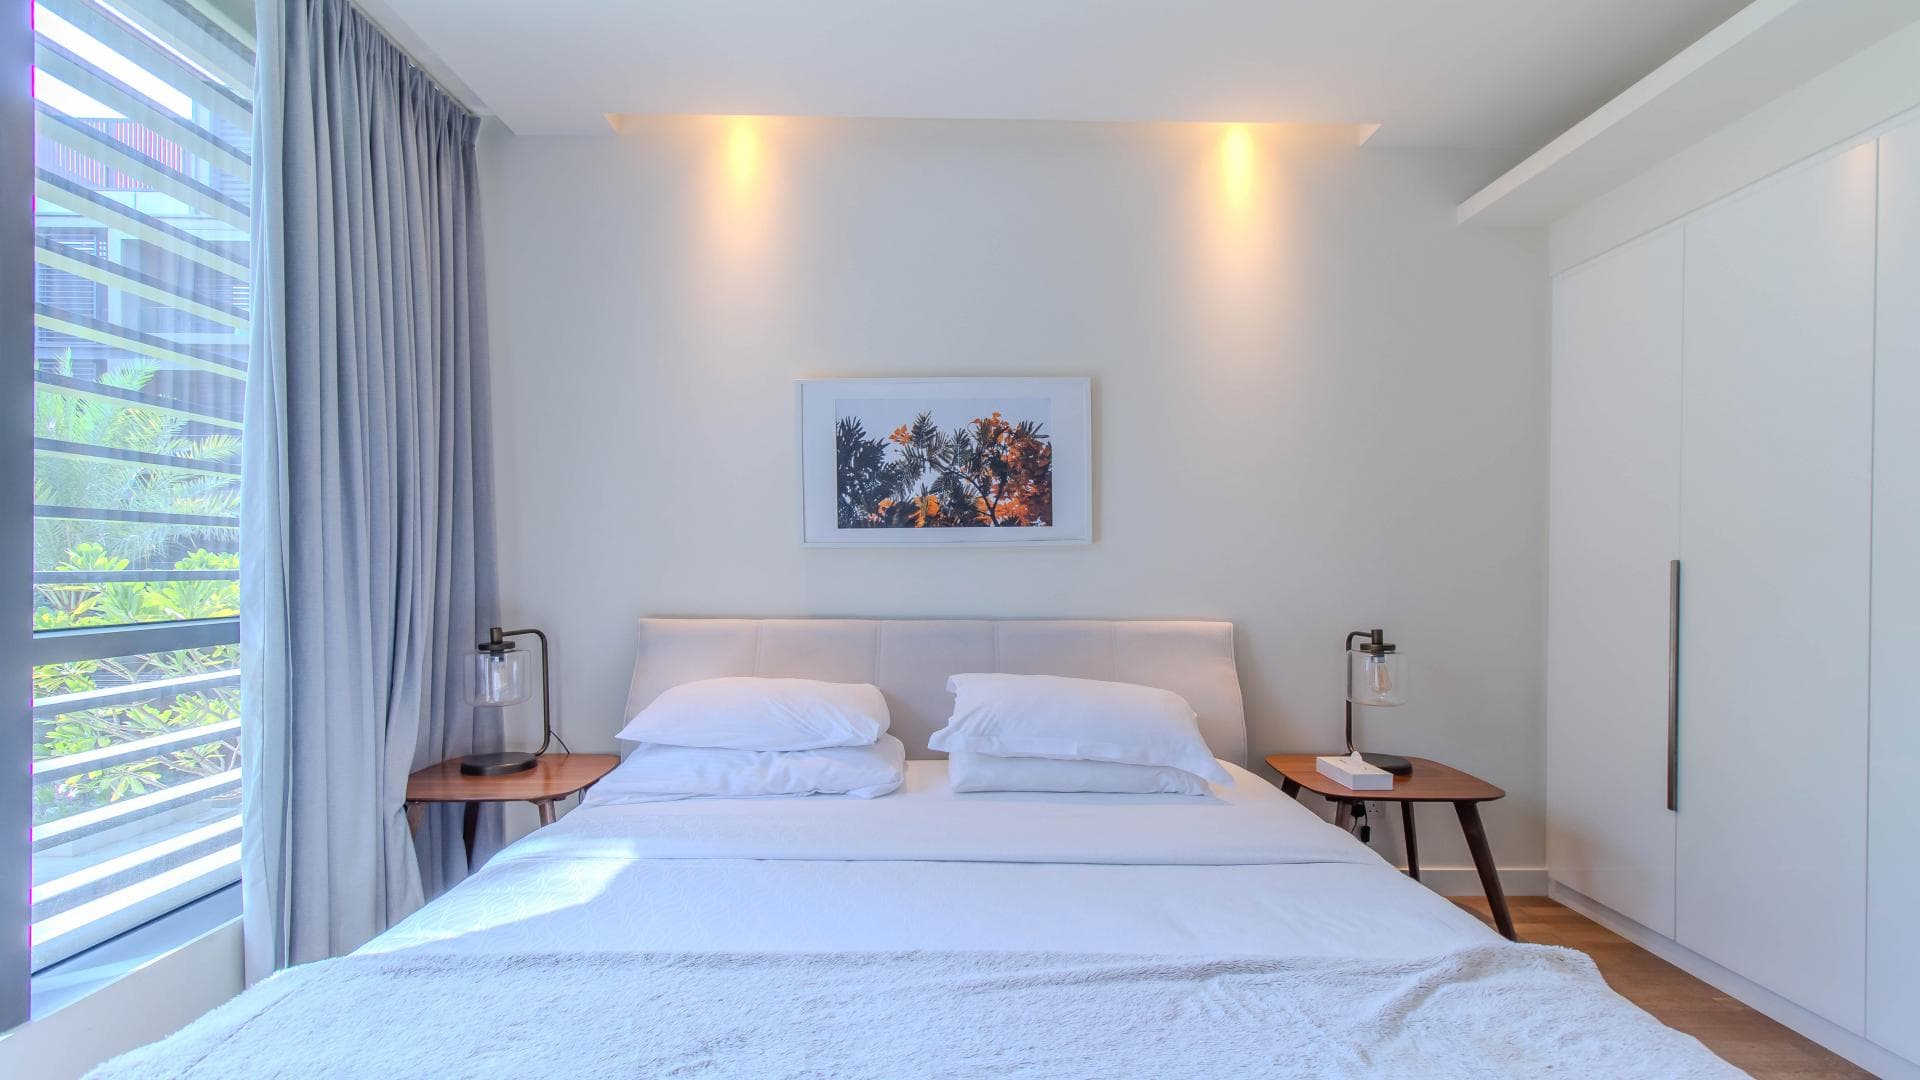 3 Bedroom Apartment For Rent Sunset Boulevard Lp38622 10212d47526a2000.jpg